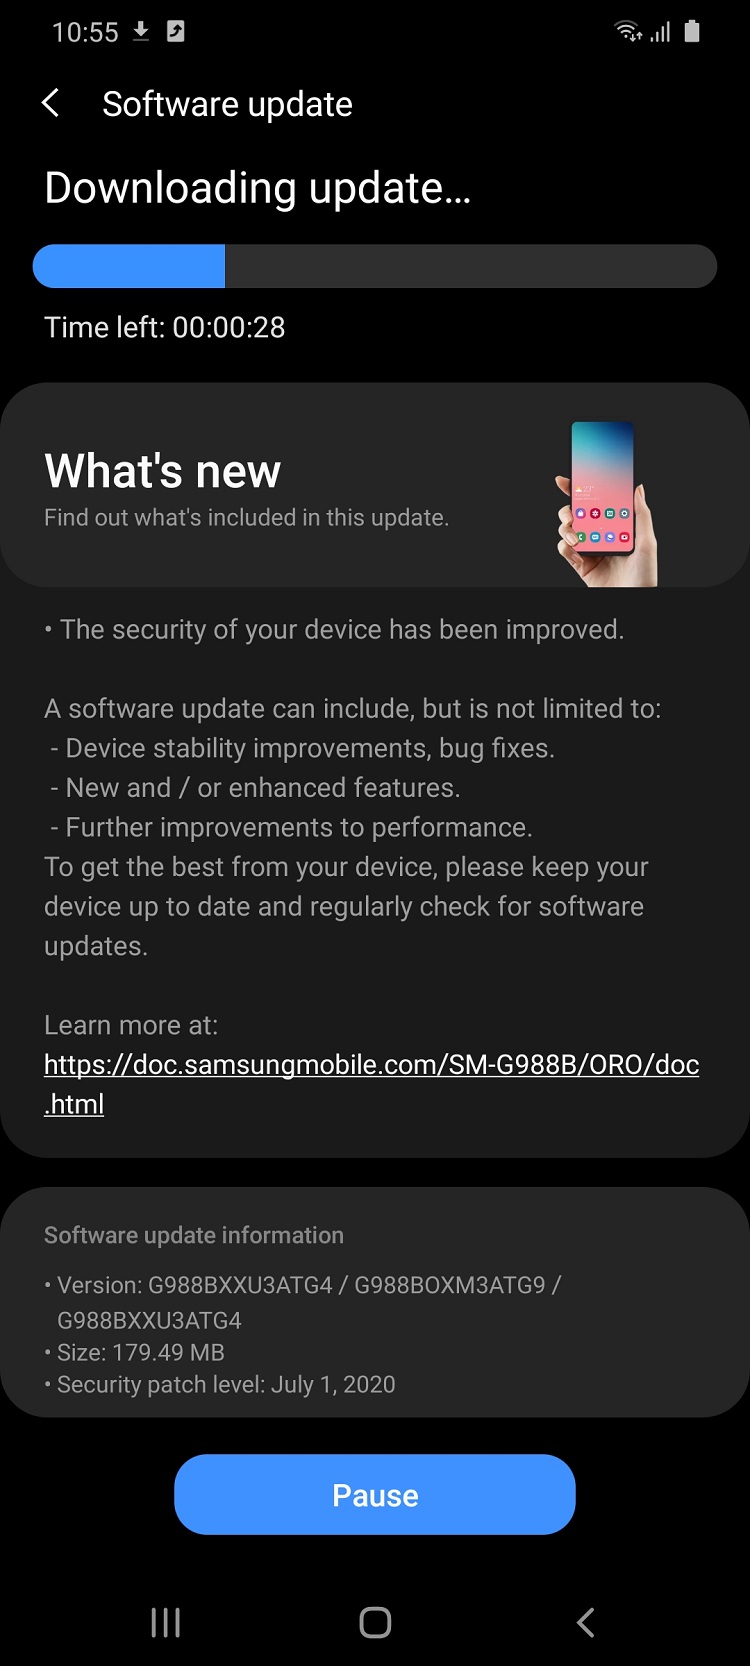 Samsung Galaxy S20 Ultra primeste firmware-ul G988BXU3ATG4/G988BOXM3ATG9/G988BXXU3ATG4 cu remediile de Android 10 pentru luna iulie.